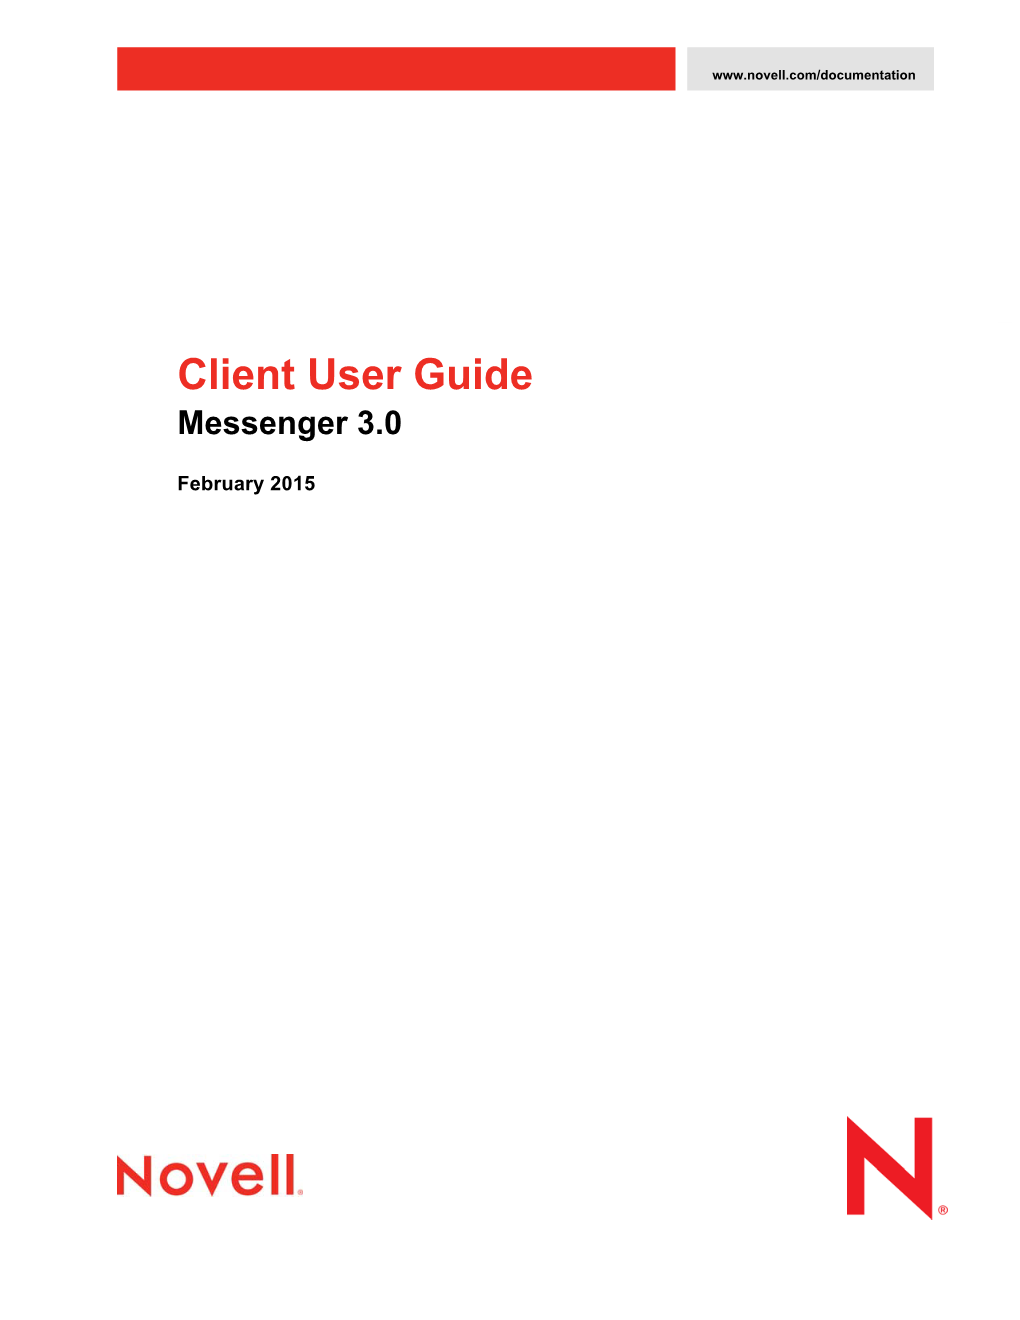 Novell Messenger 3.0 Client User Guide 10 Using Novell Messenger on Your Mobile Device 59